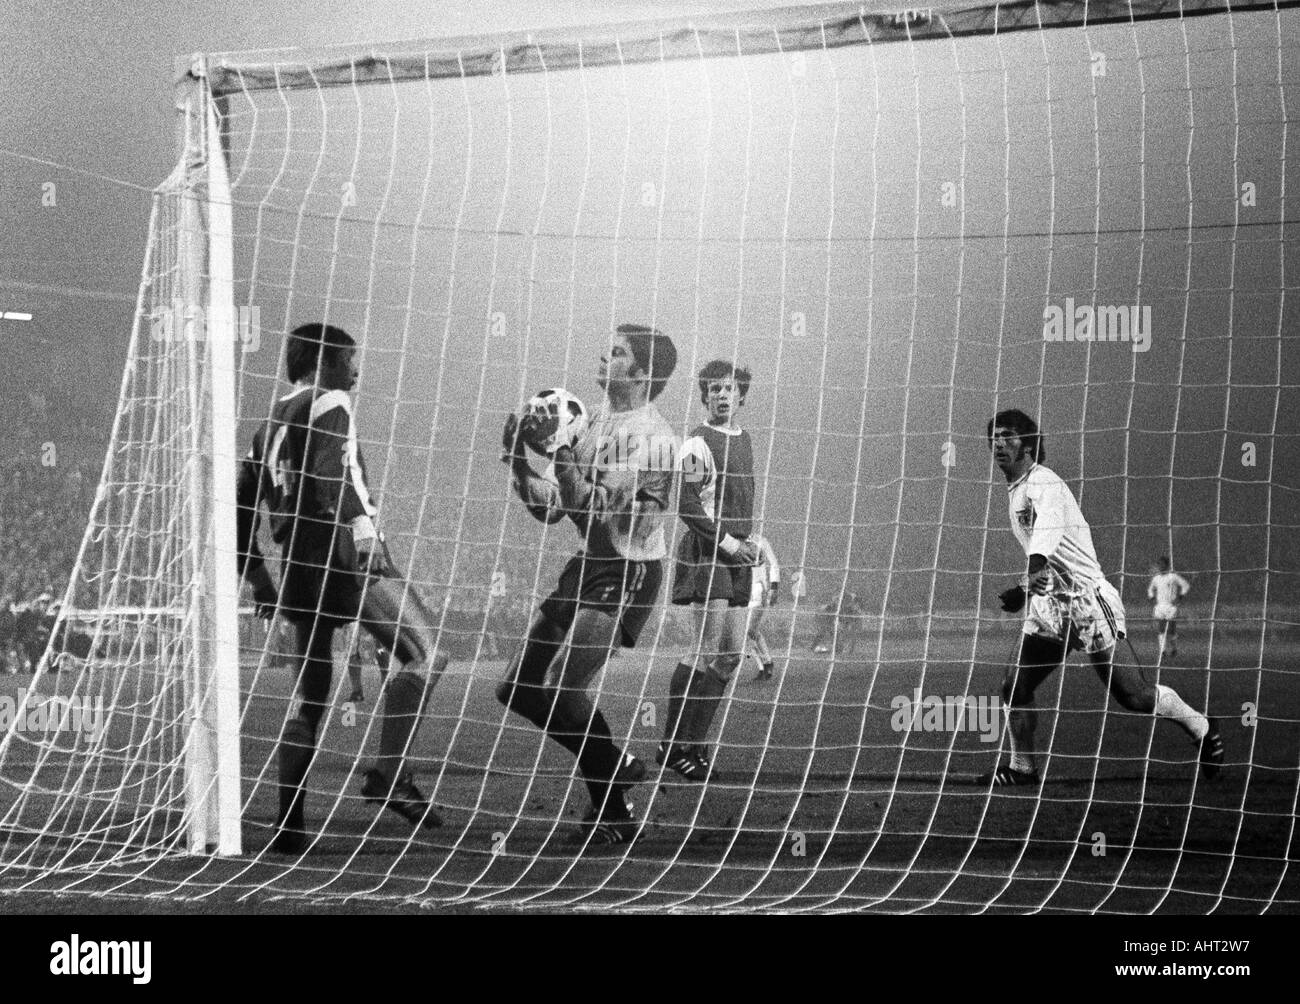 Calcio, Bundesliga, 1970/1971, Niederrhein Stadium di Oberhausen, Rot-Weiss Oberhausen rispetto a FC Bayern Monaco 0:4, scena del match, f.l.t.r. Werner Ohm, keeper Wolfgang Scheid, Reiner Hollmann (tutti OB), Gerd Mueller (FCB) Foto Stock